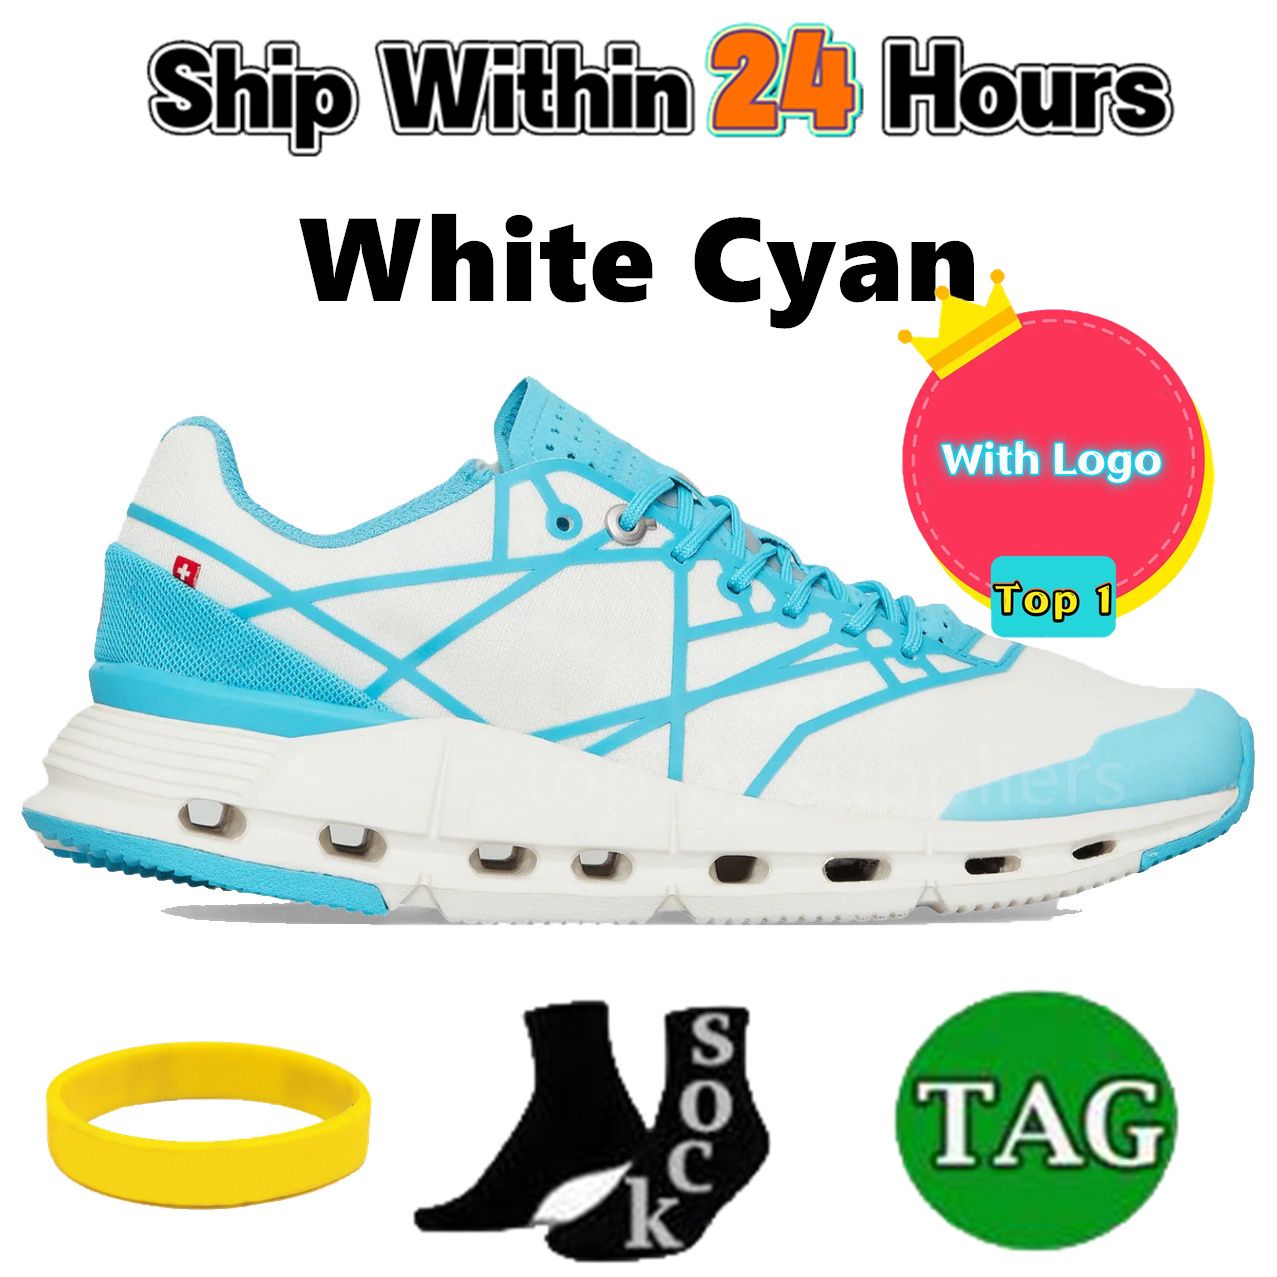 29 Weiß-Cyan